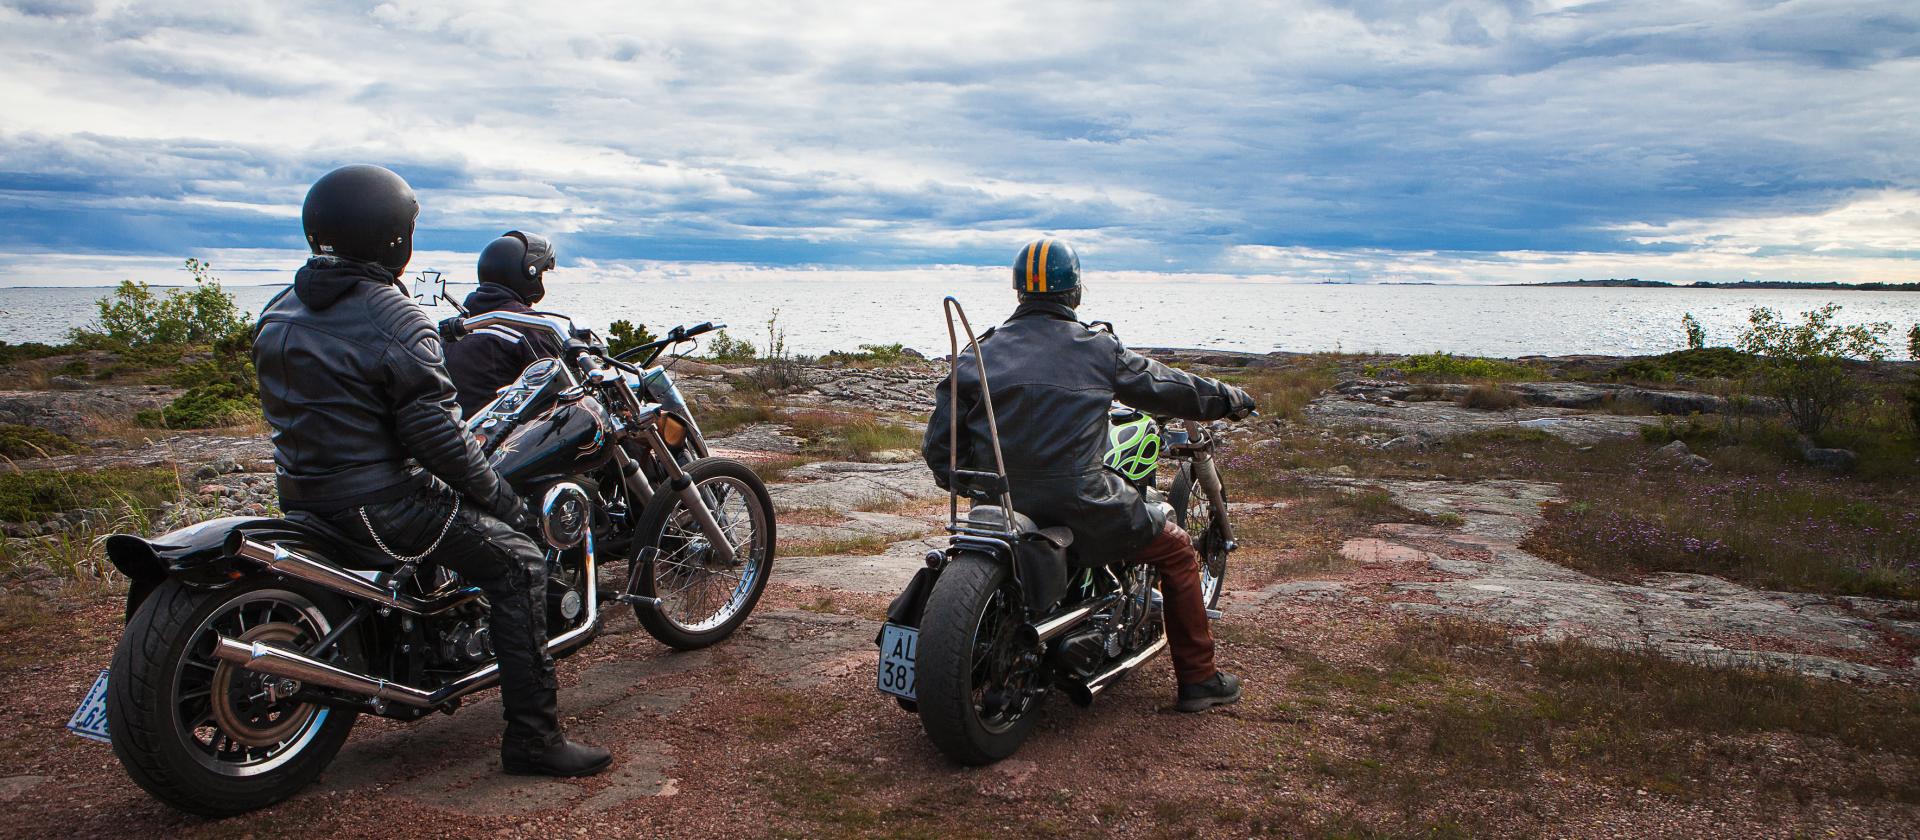 Motorcyklister vid havet på Åland.